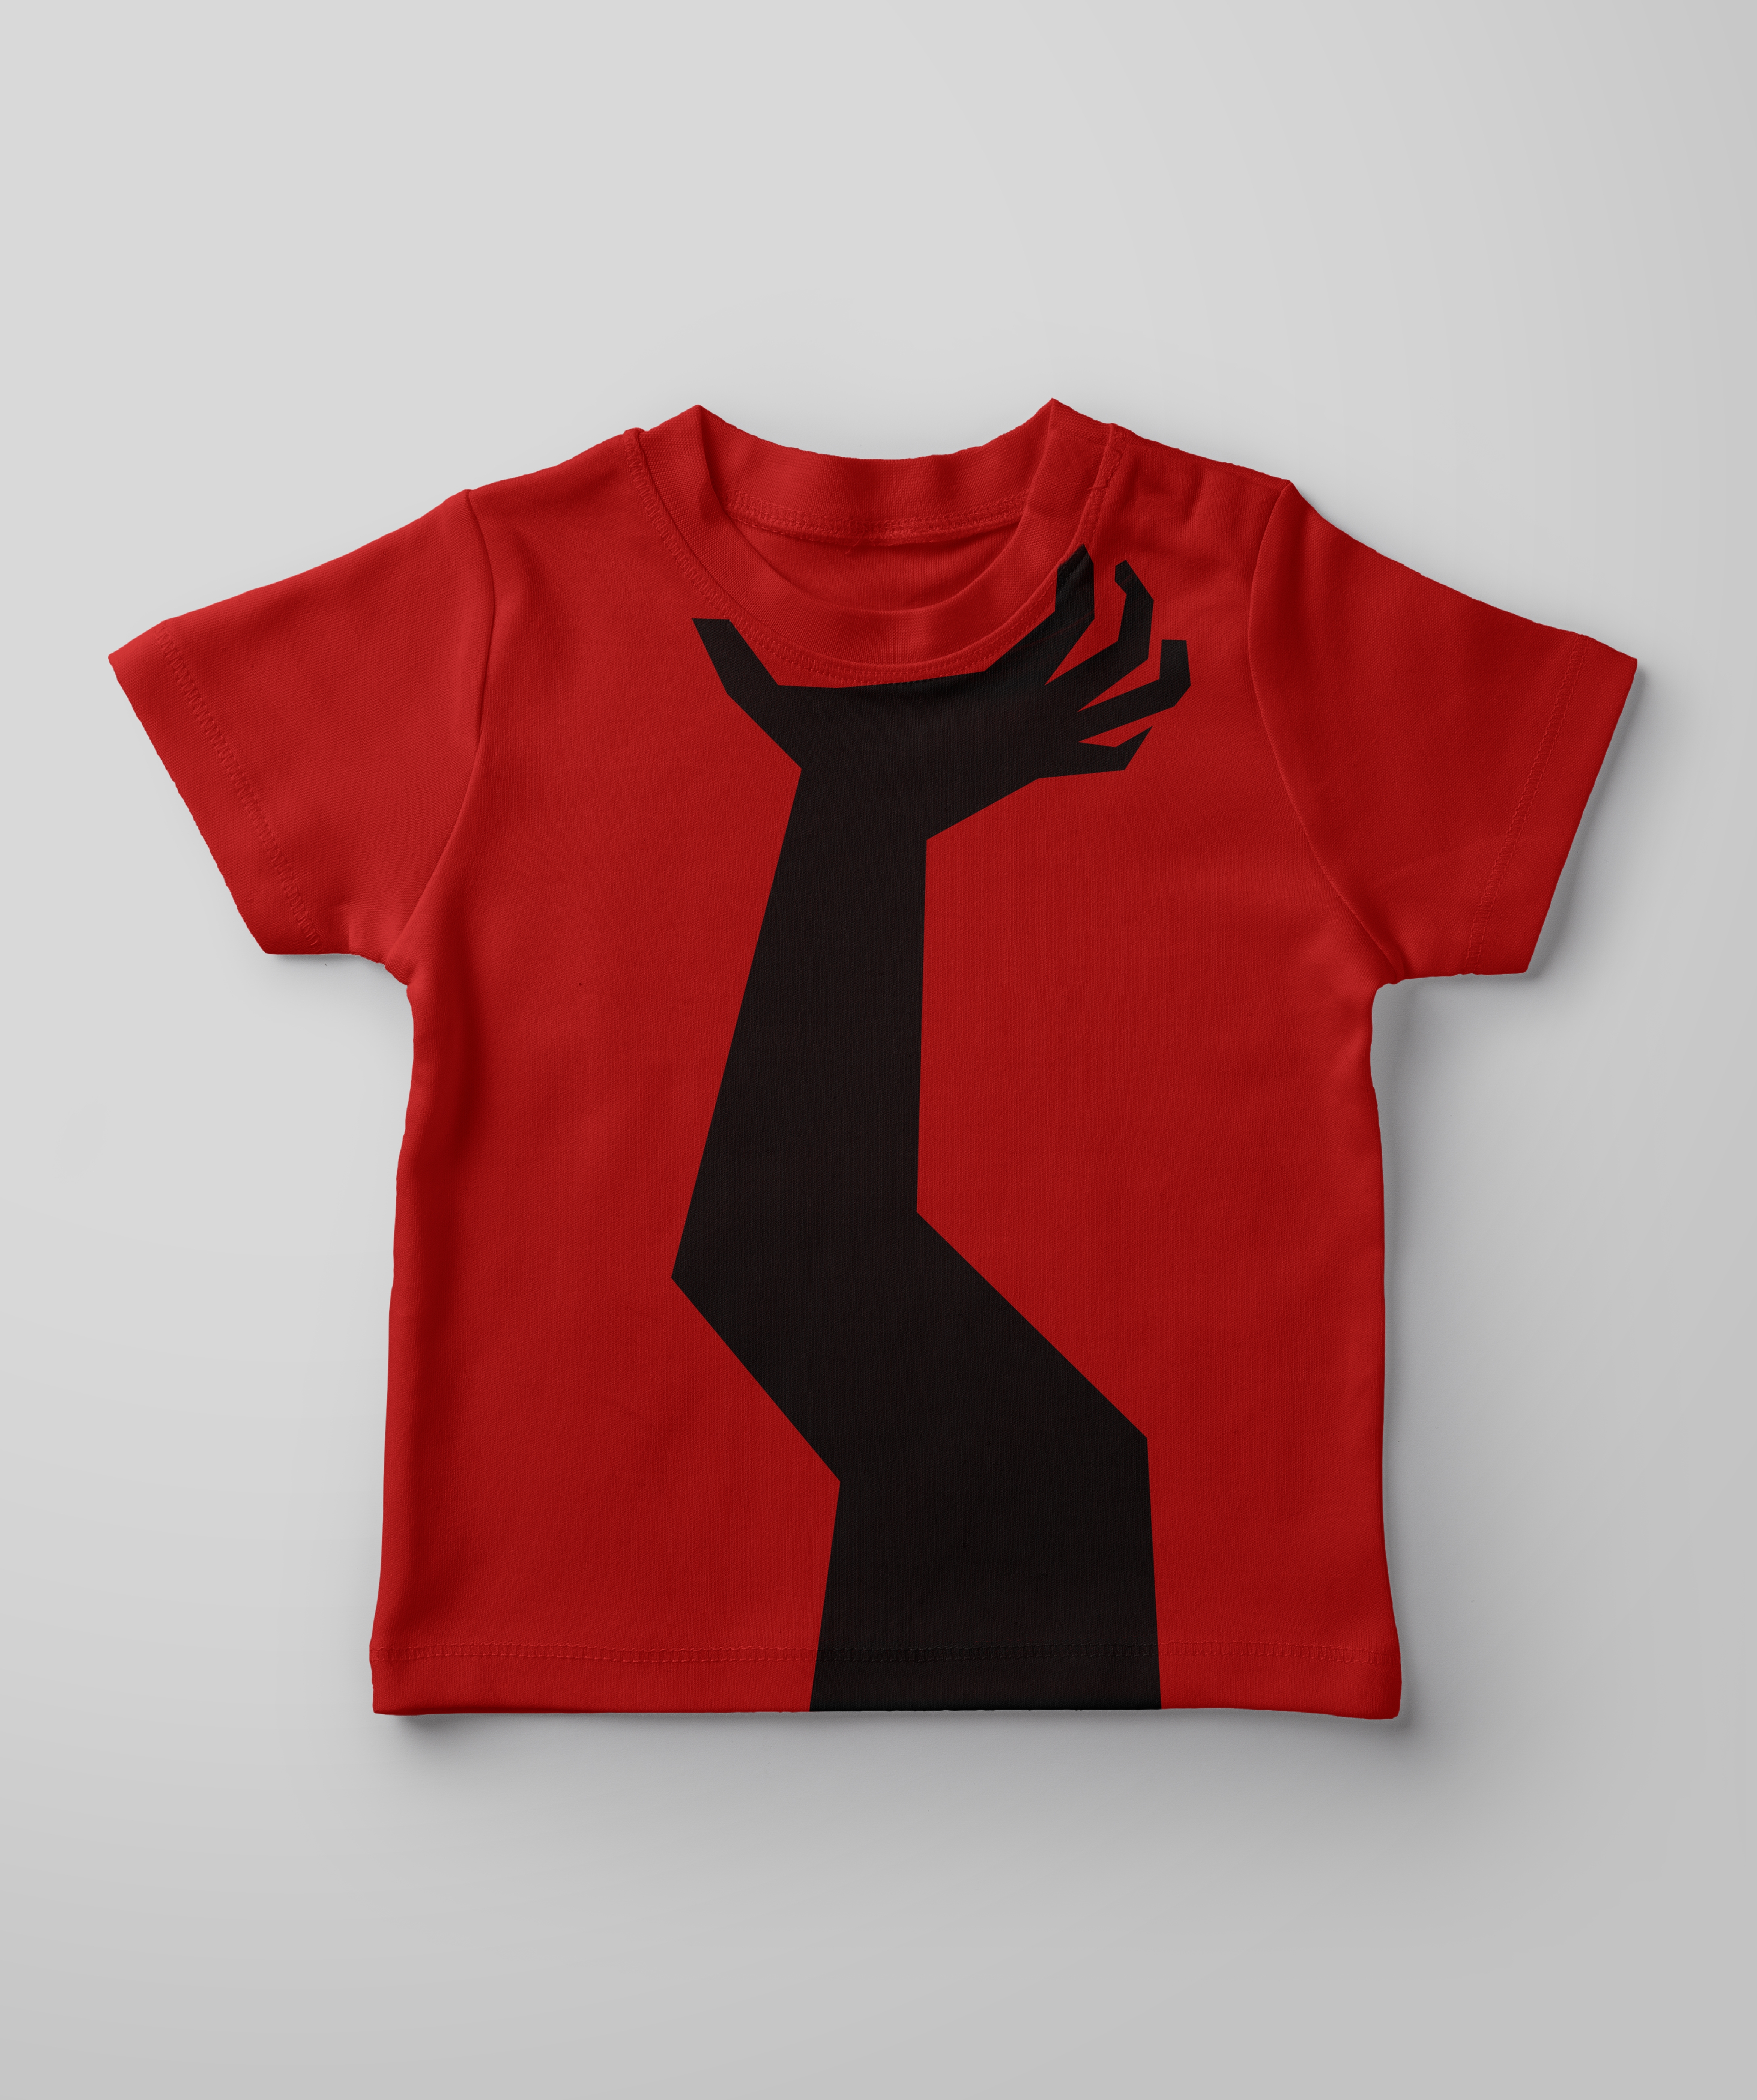 UrGear | UrGear Kids Red Hand Printed Cotton T-Shirt 0